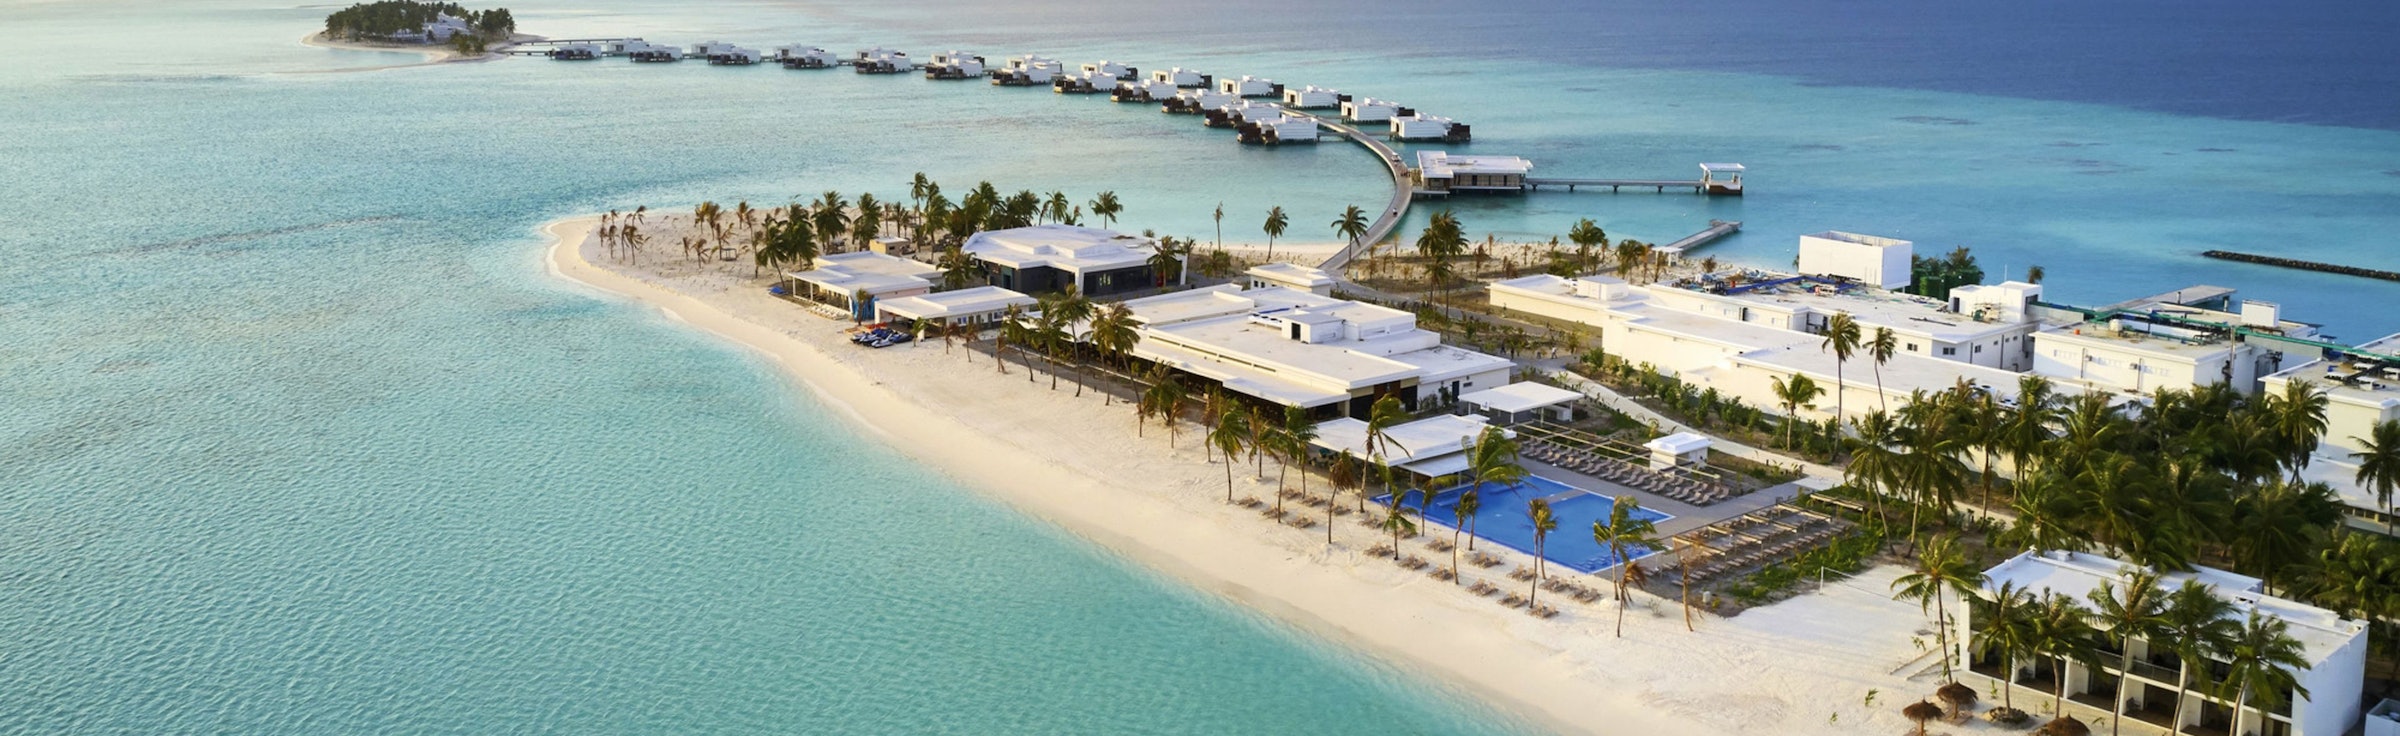 RIU Atoll Maldives Resort 